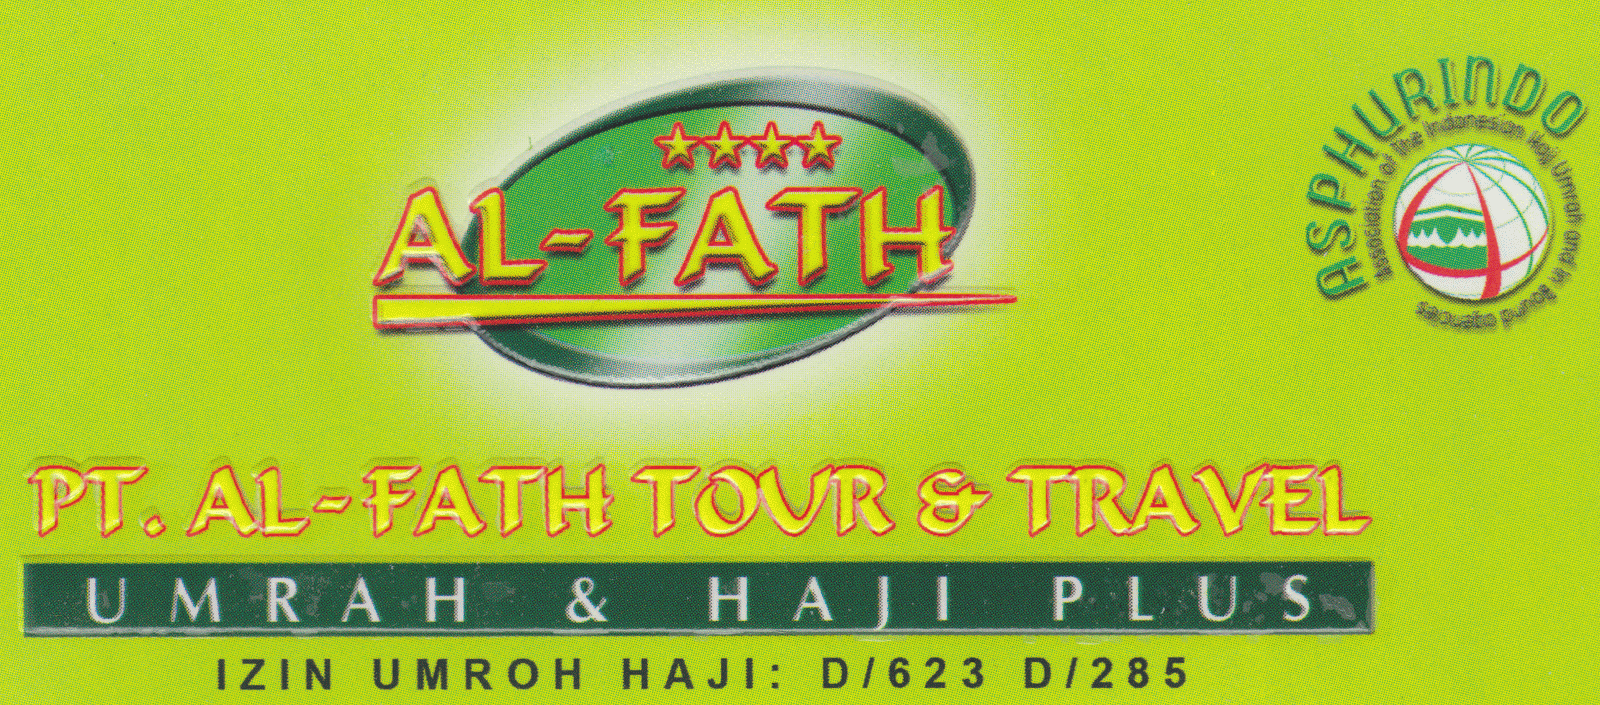 al-fath tour & Travel